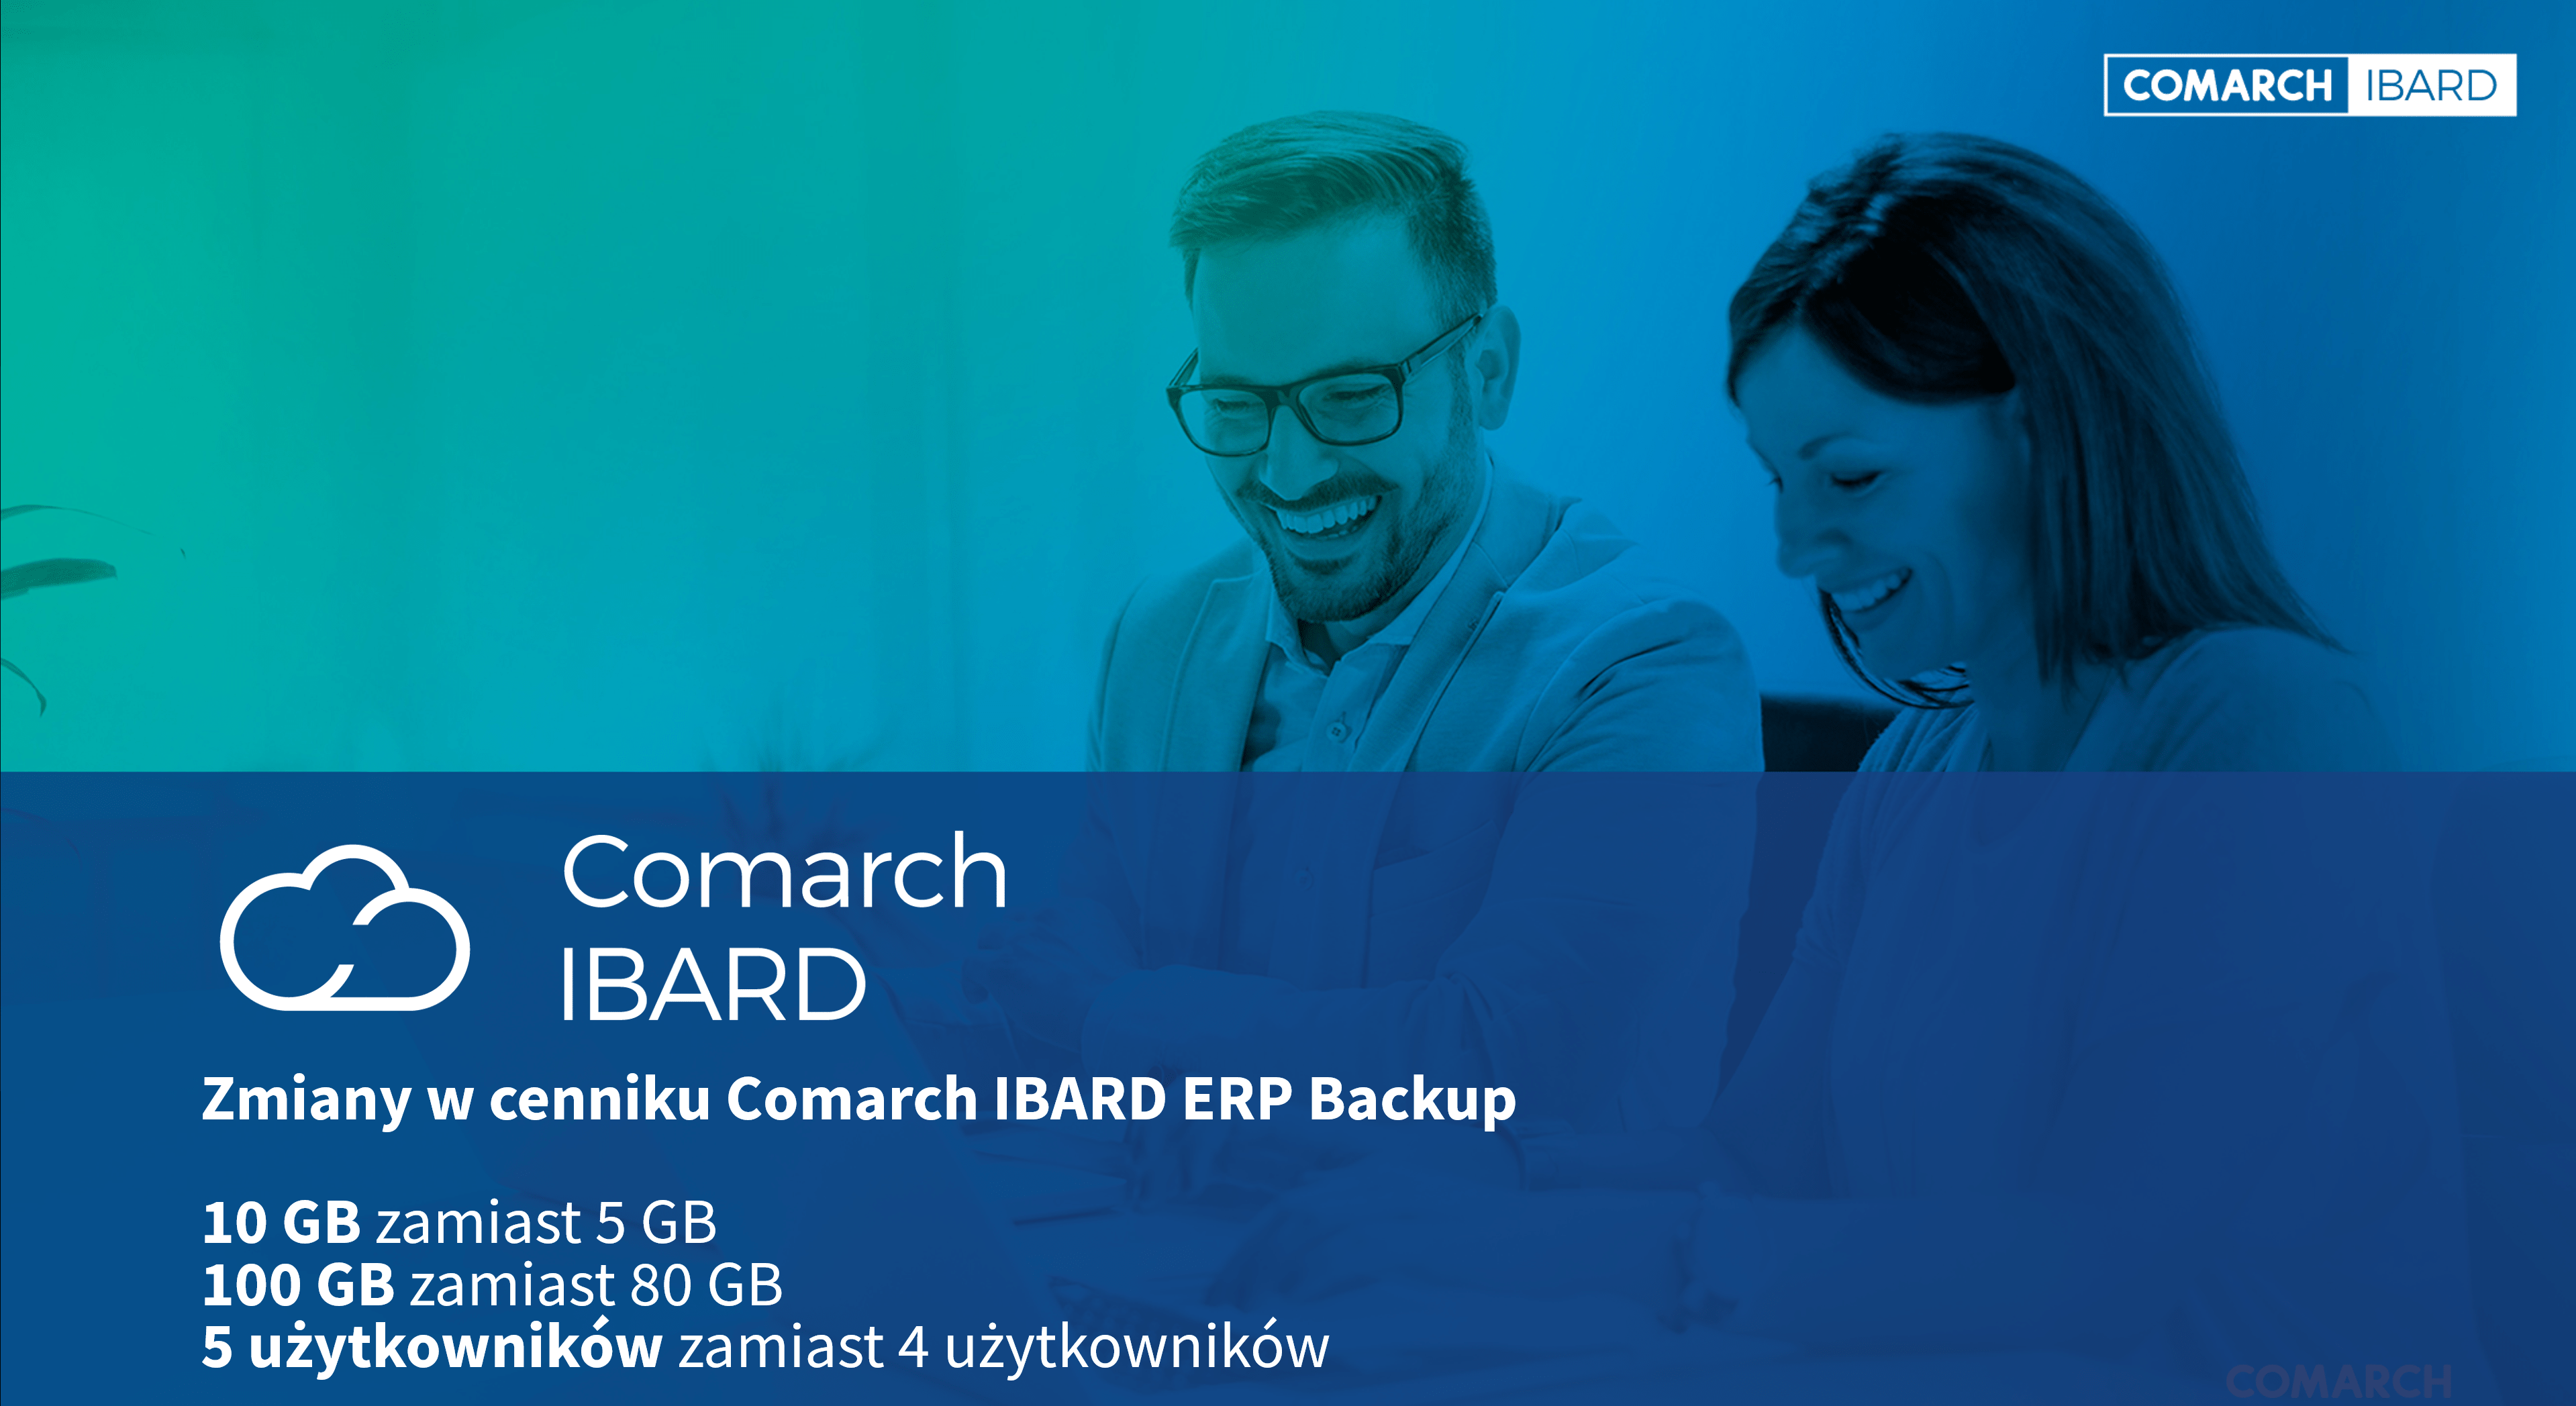 Zmiany w cenniku Comarch IBARD ERP Backup